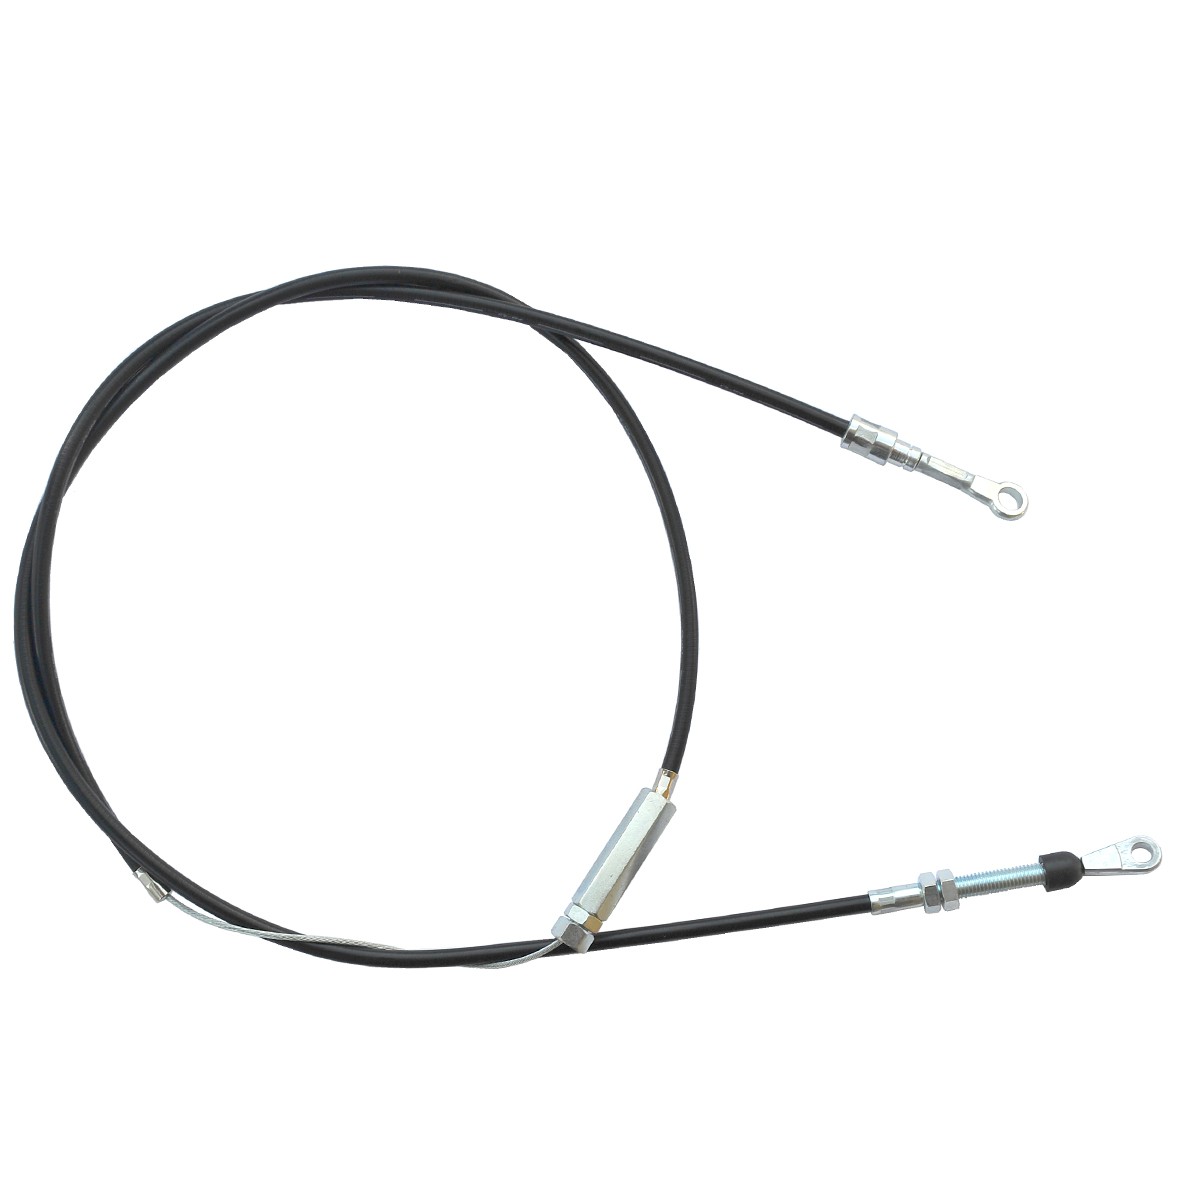 Iseki SXG19 clutch cable / 1530 mm / 1728-334-240-30